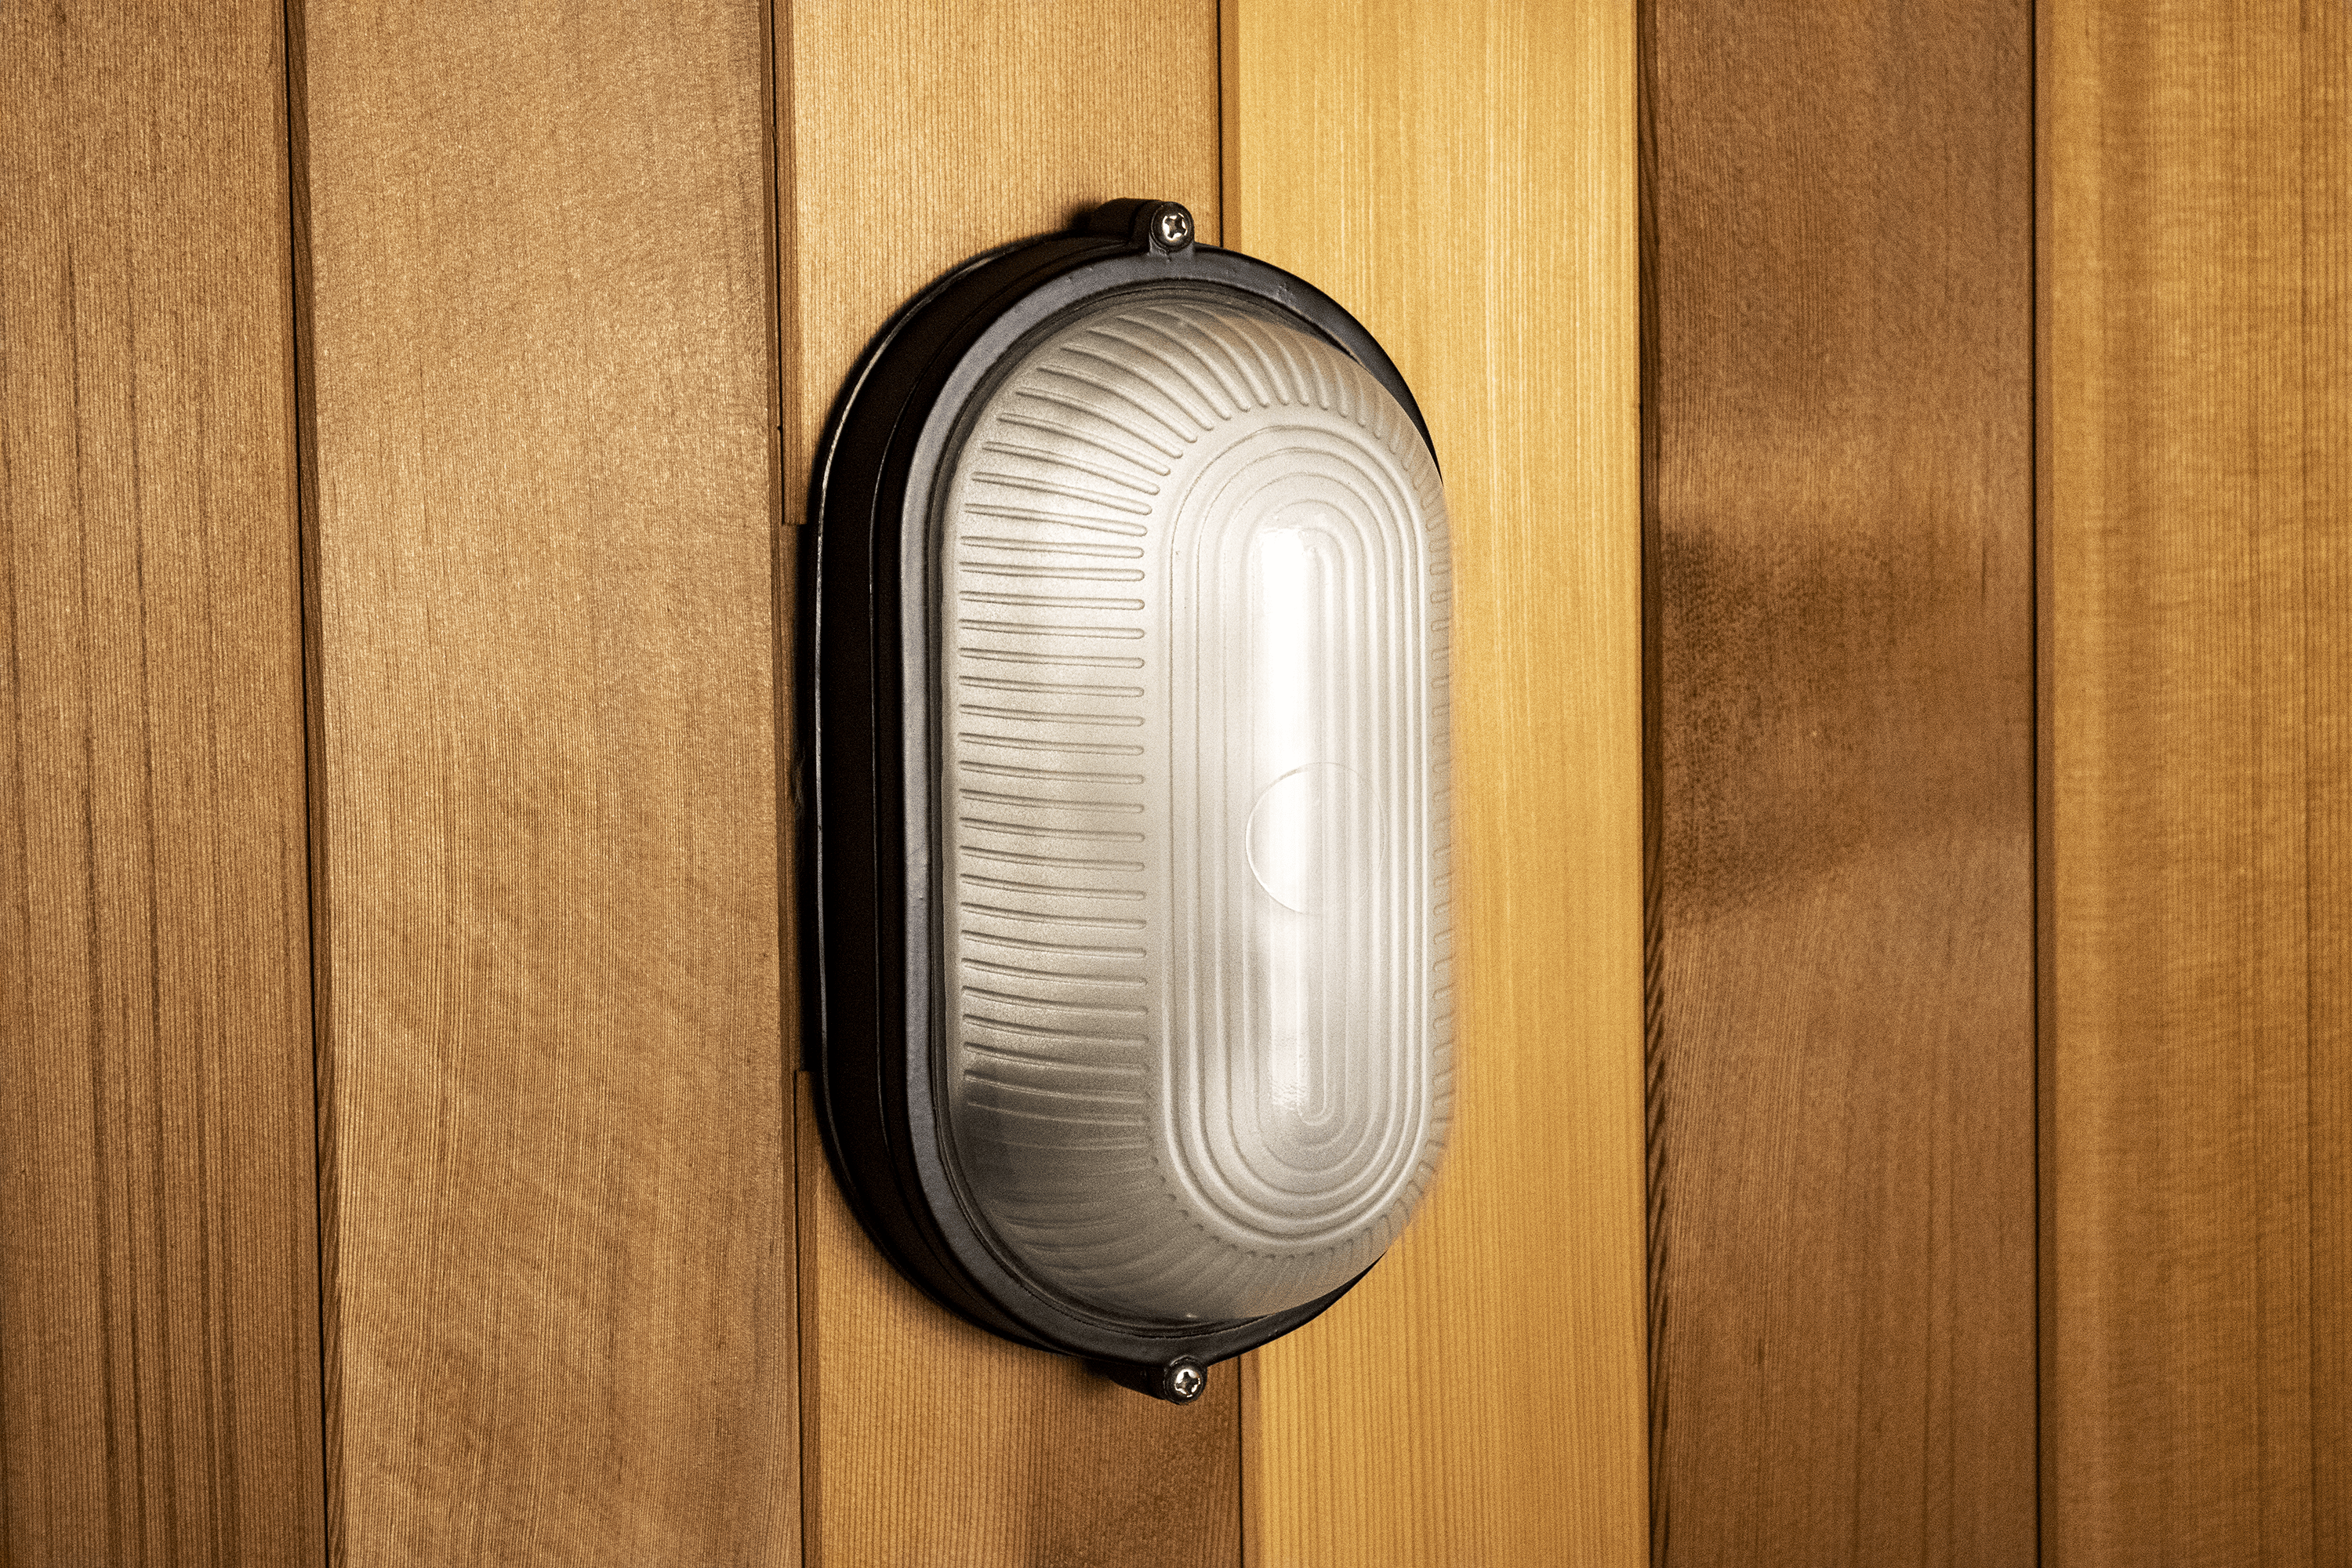 Oval Sauna Light- Vapor Proof Sauna Light